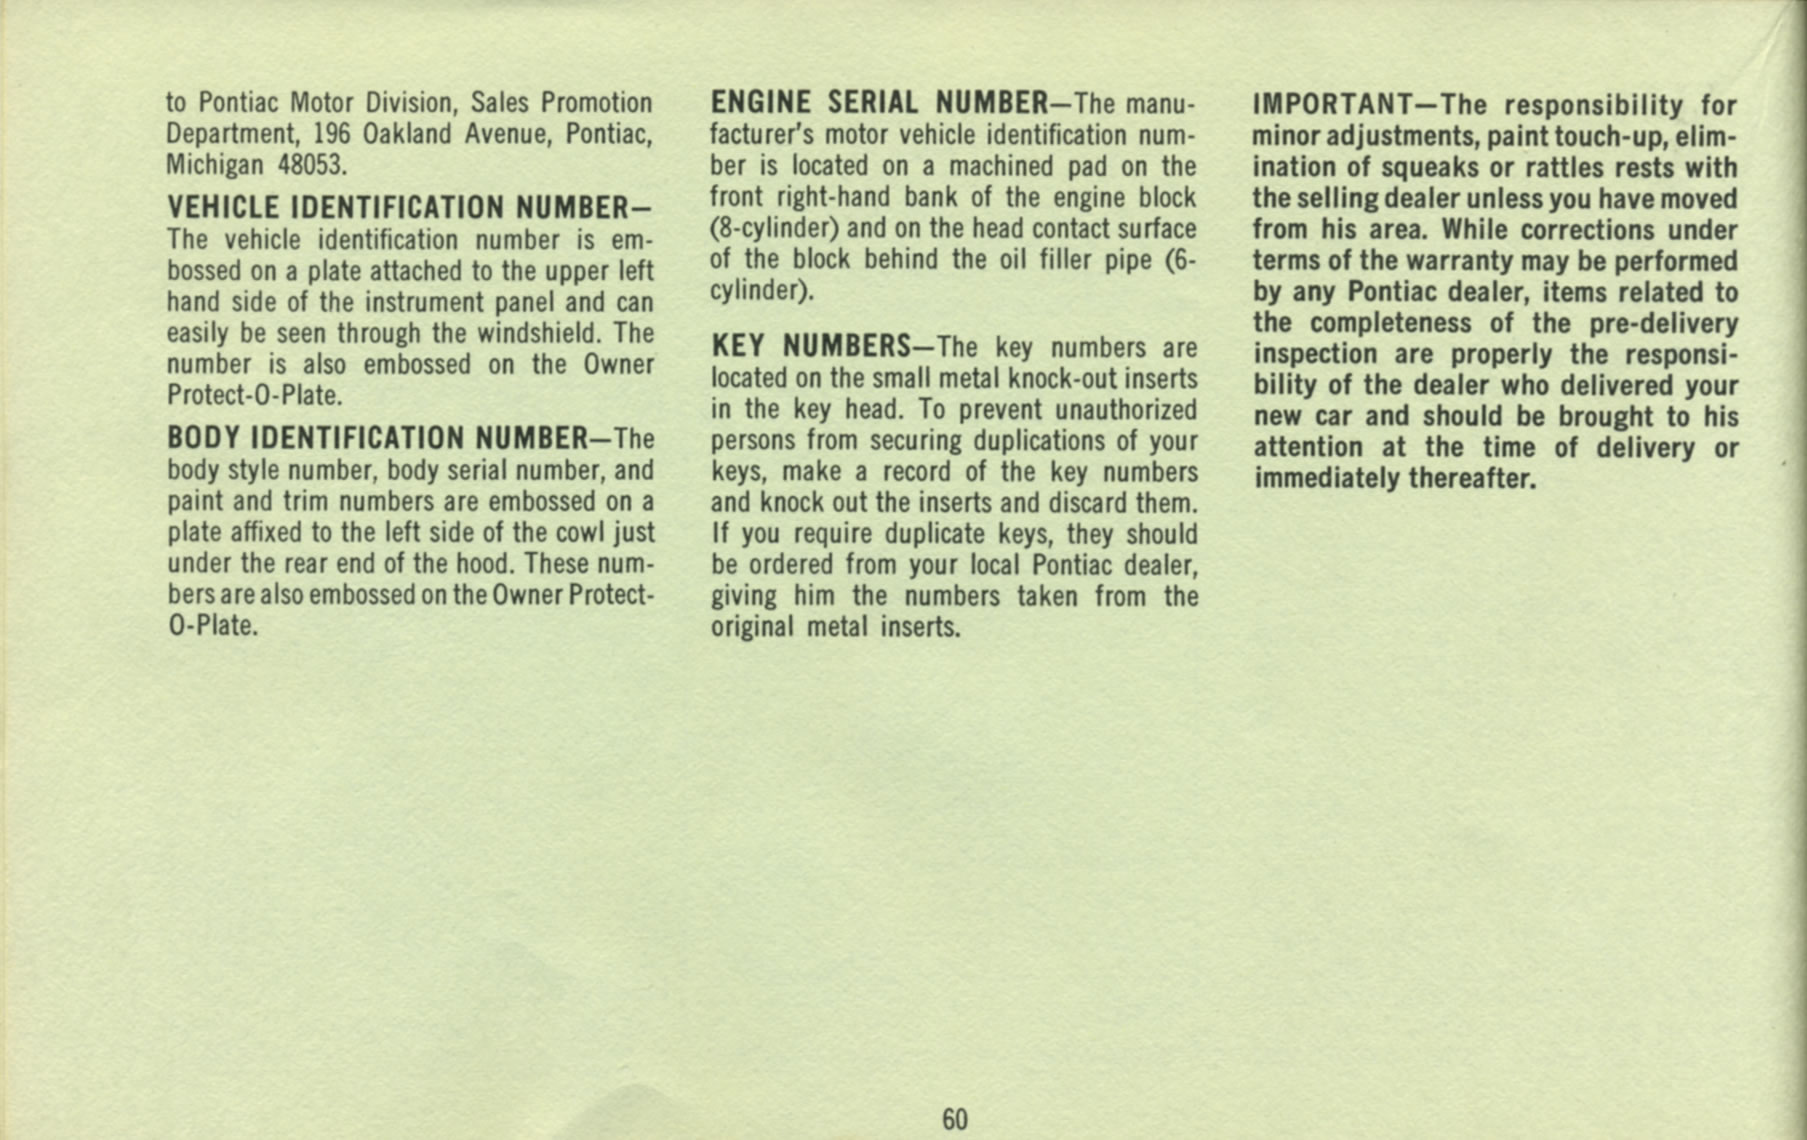 1969 Pontiac Owners Manual-60